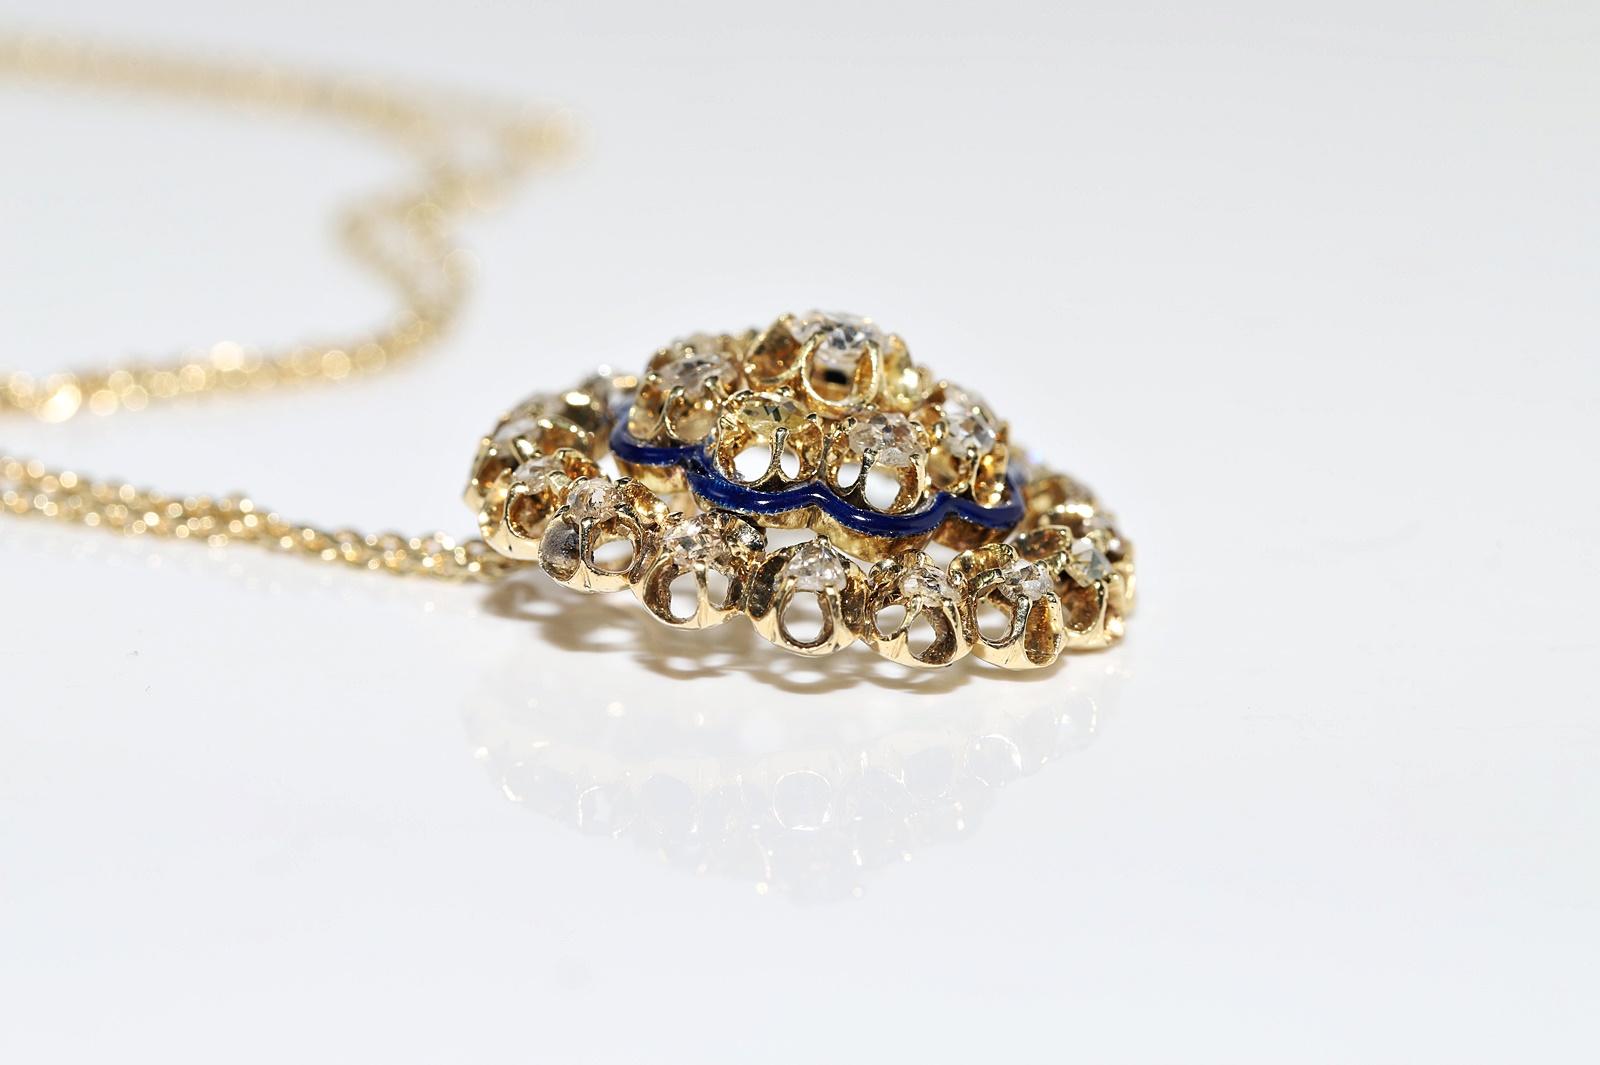 Antique Circa 1900s 18k Gold Natural Diamond And Enamel Pendant Necklace For Sale 2